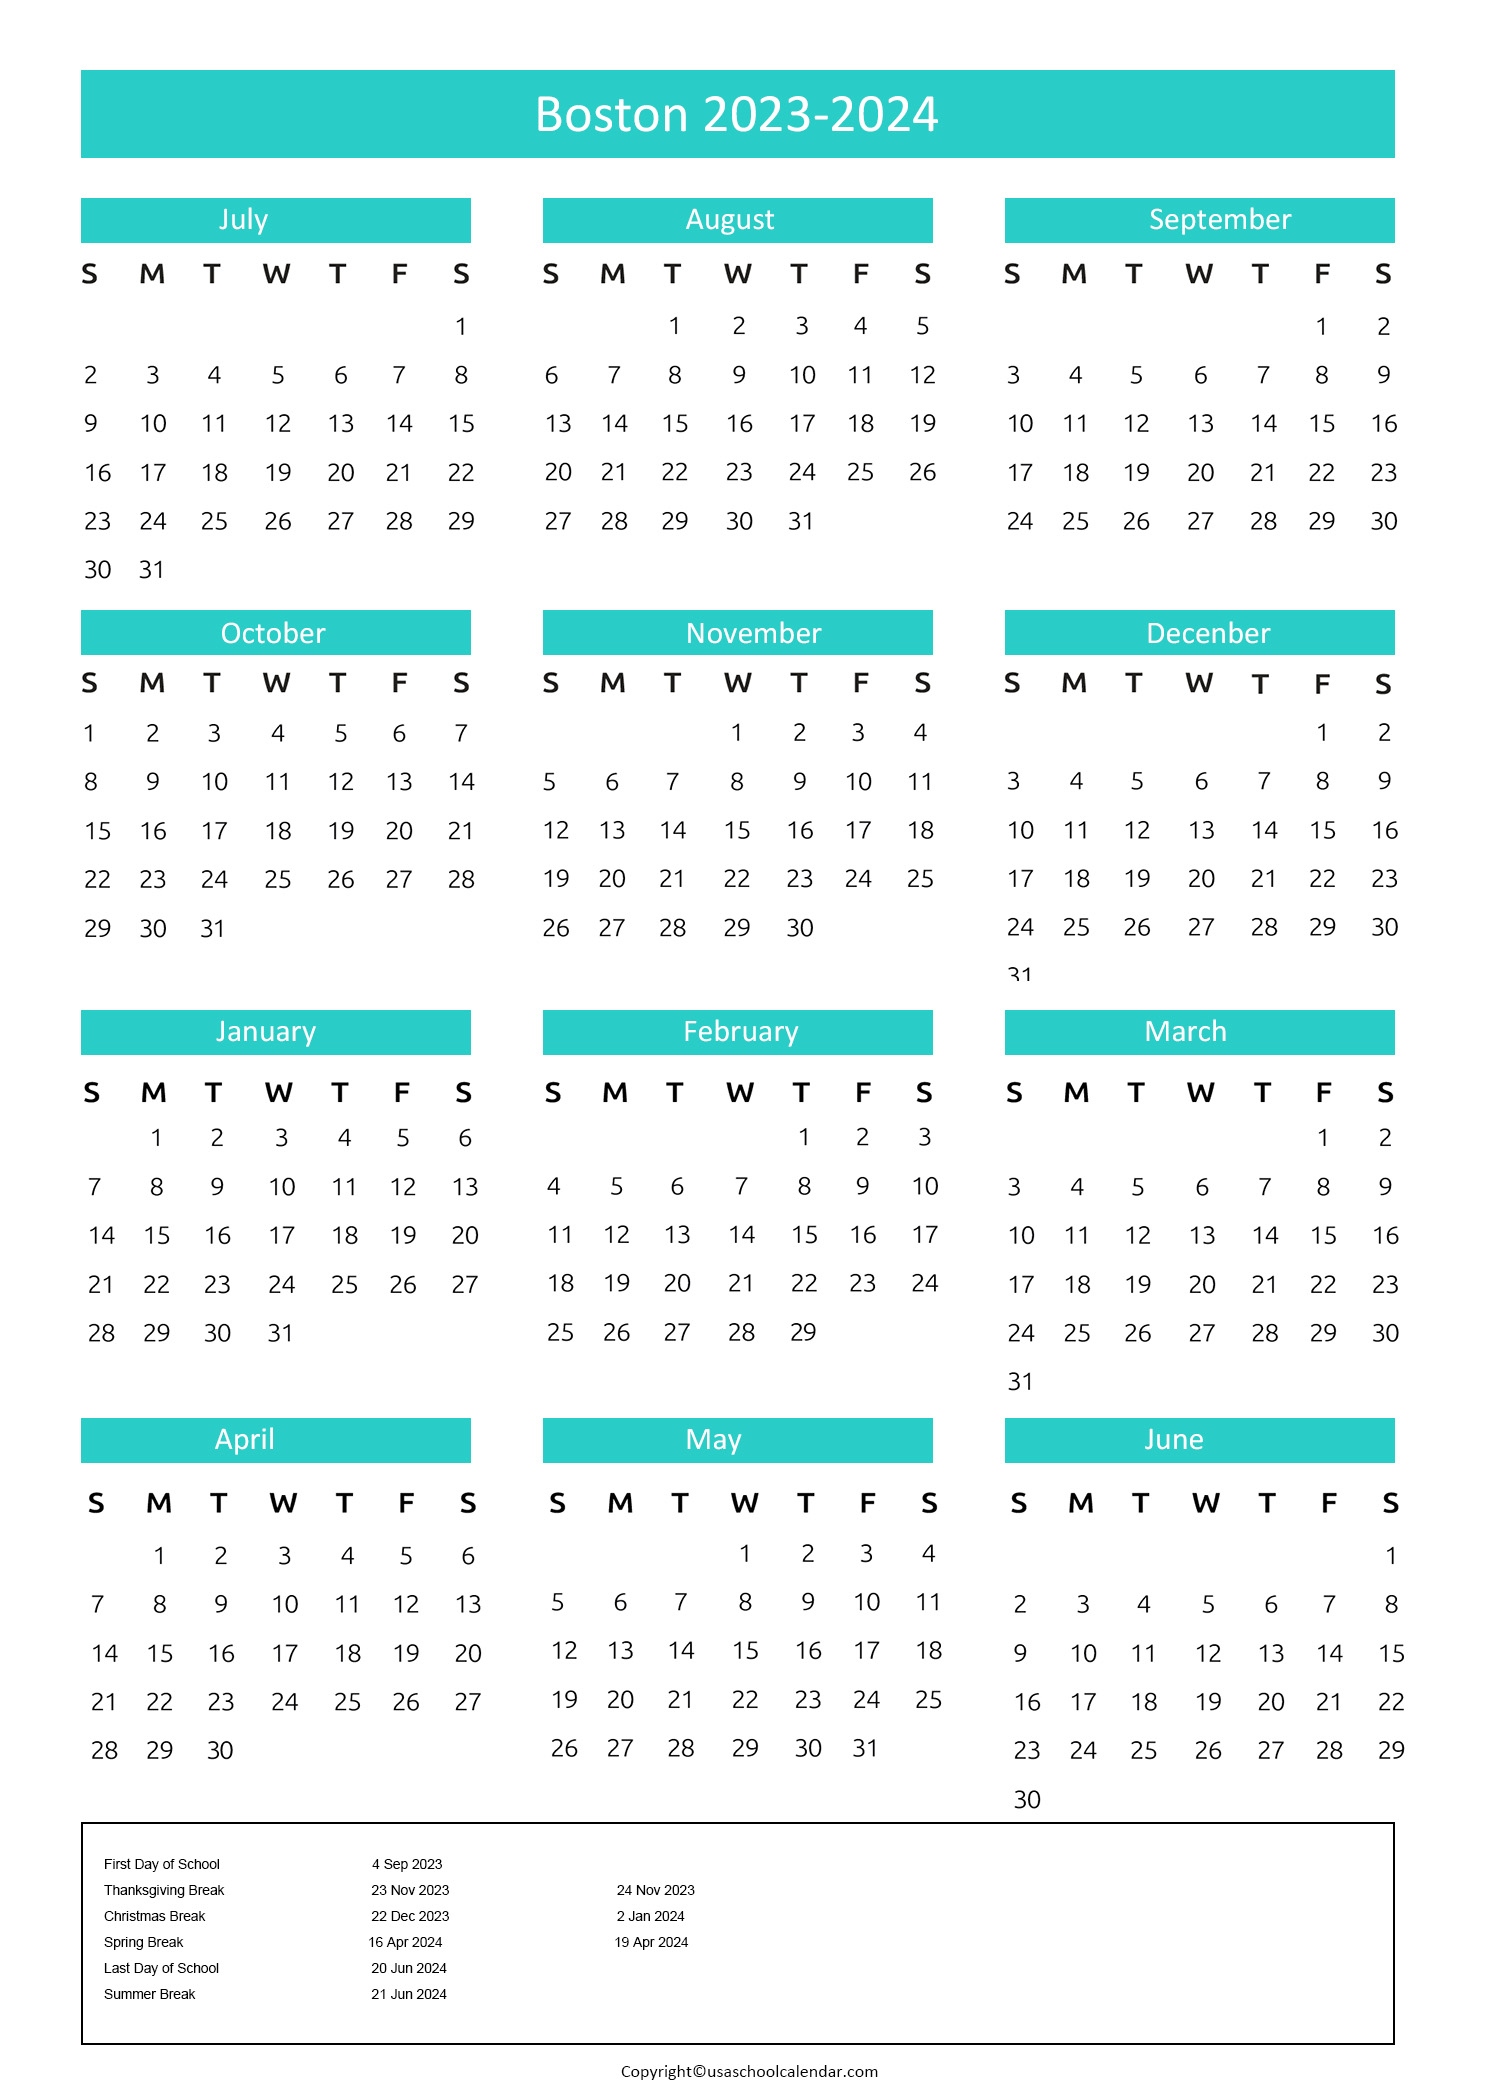 Boston Public Schools Calendar Holidays 2023 2024